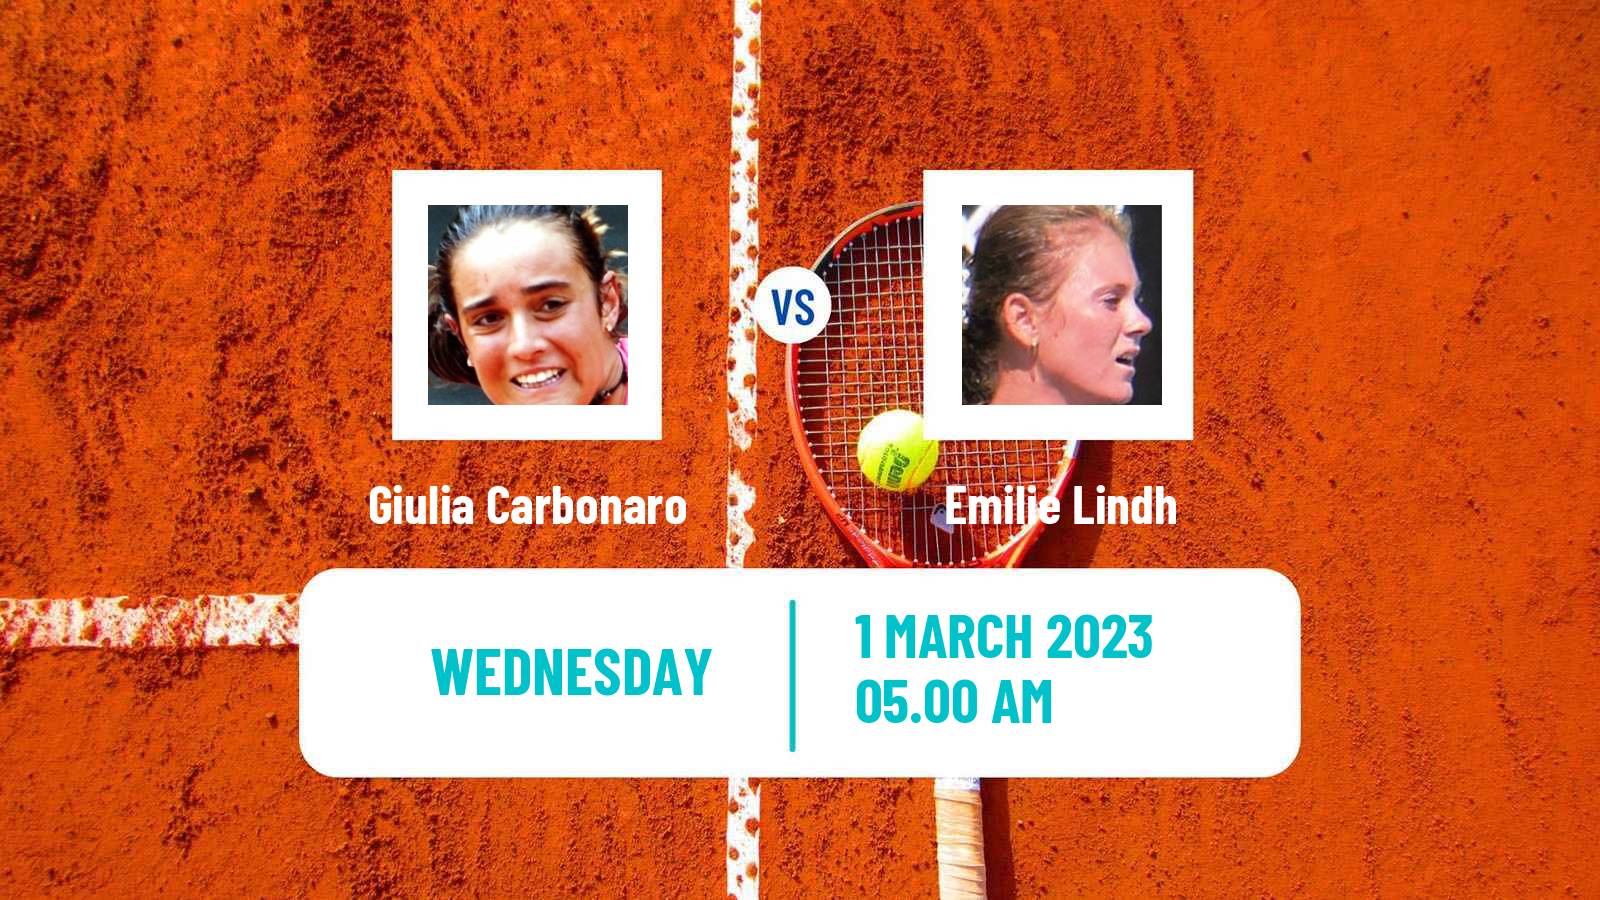 Tennis ITF Tournaments Giulia Carbonaro - Emilie Lindh